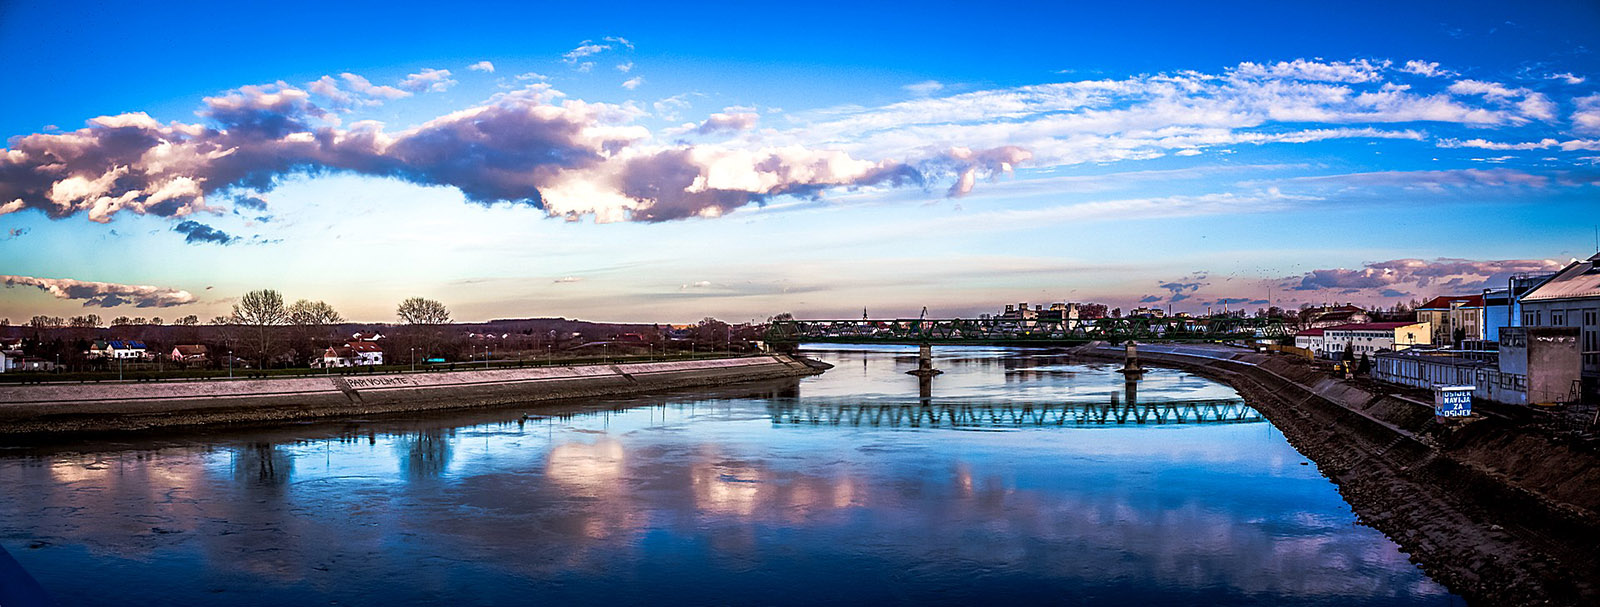 Panorama grada

Foto: Ivica Beni

Kljune rijei: panorama plavo nebo drava